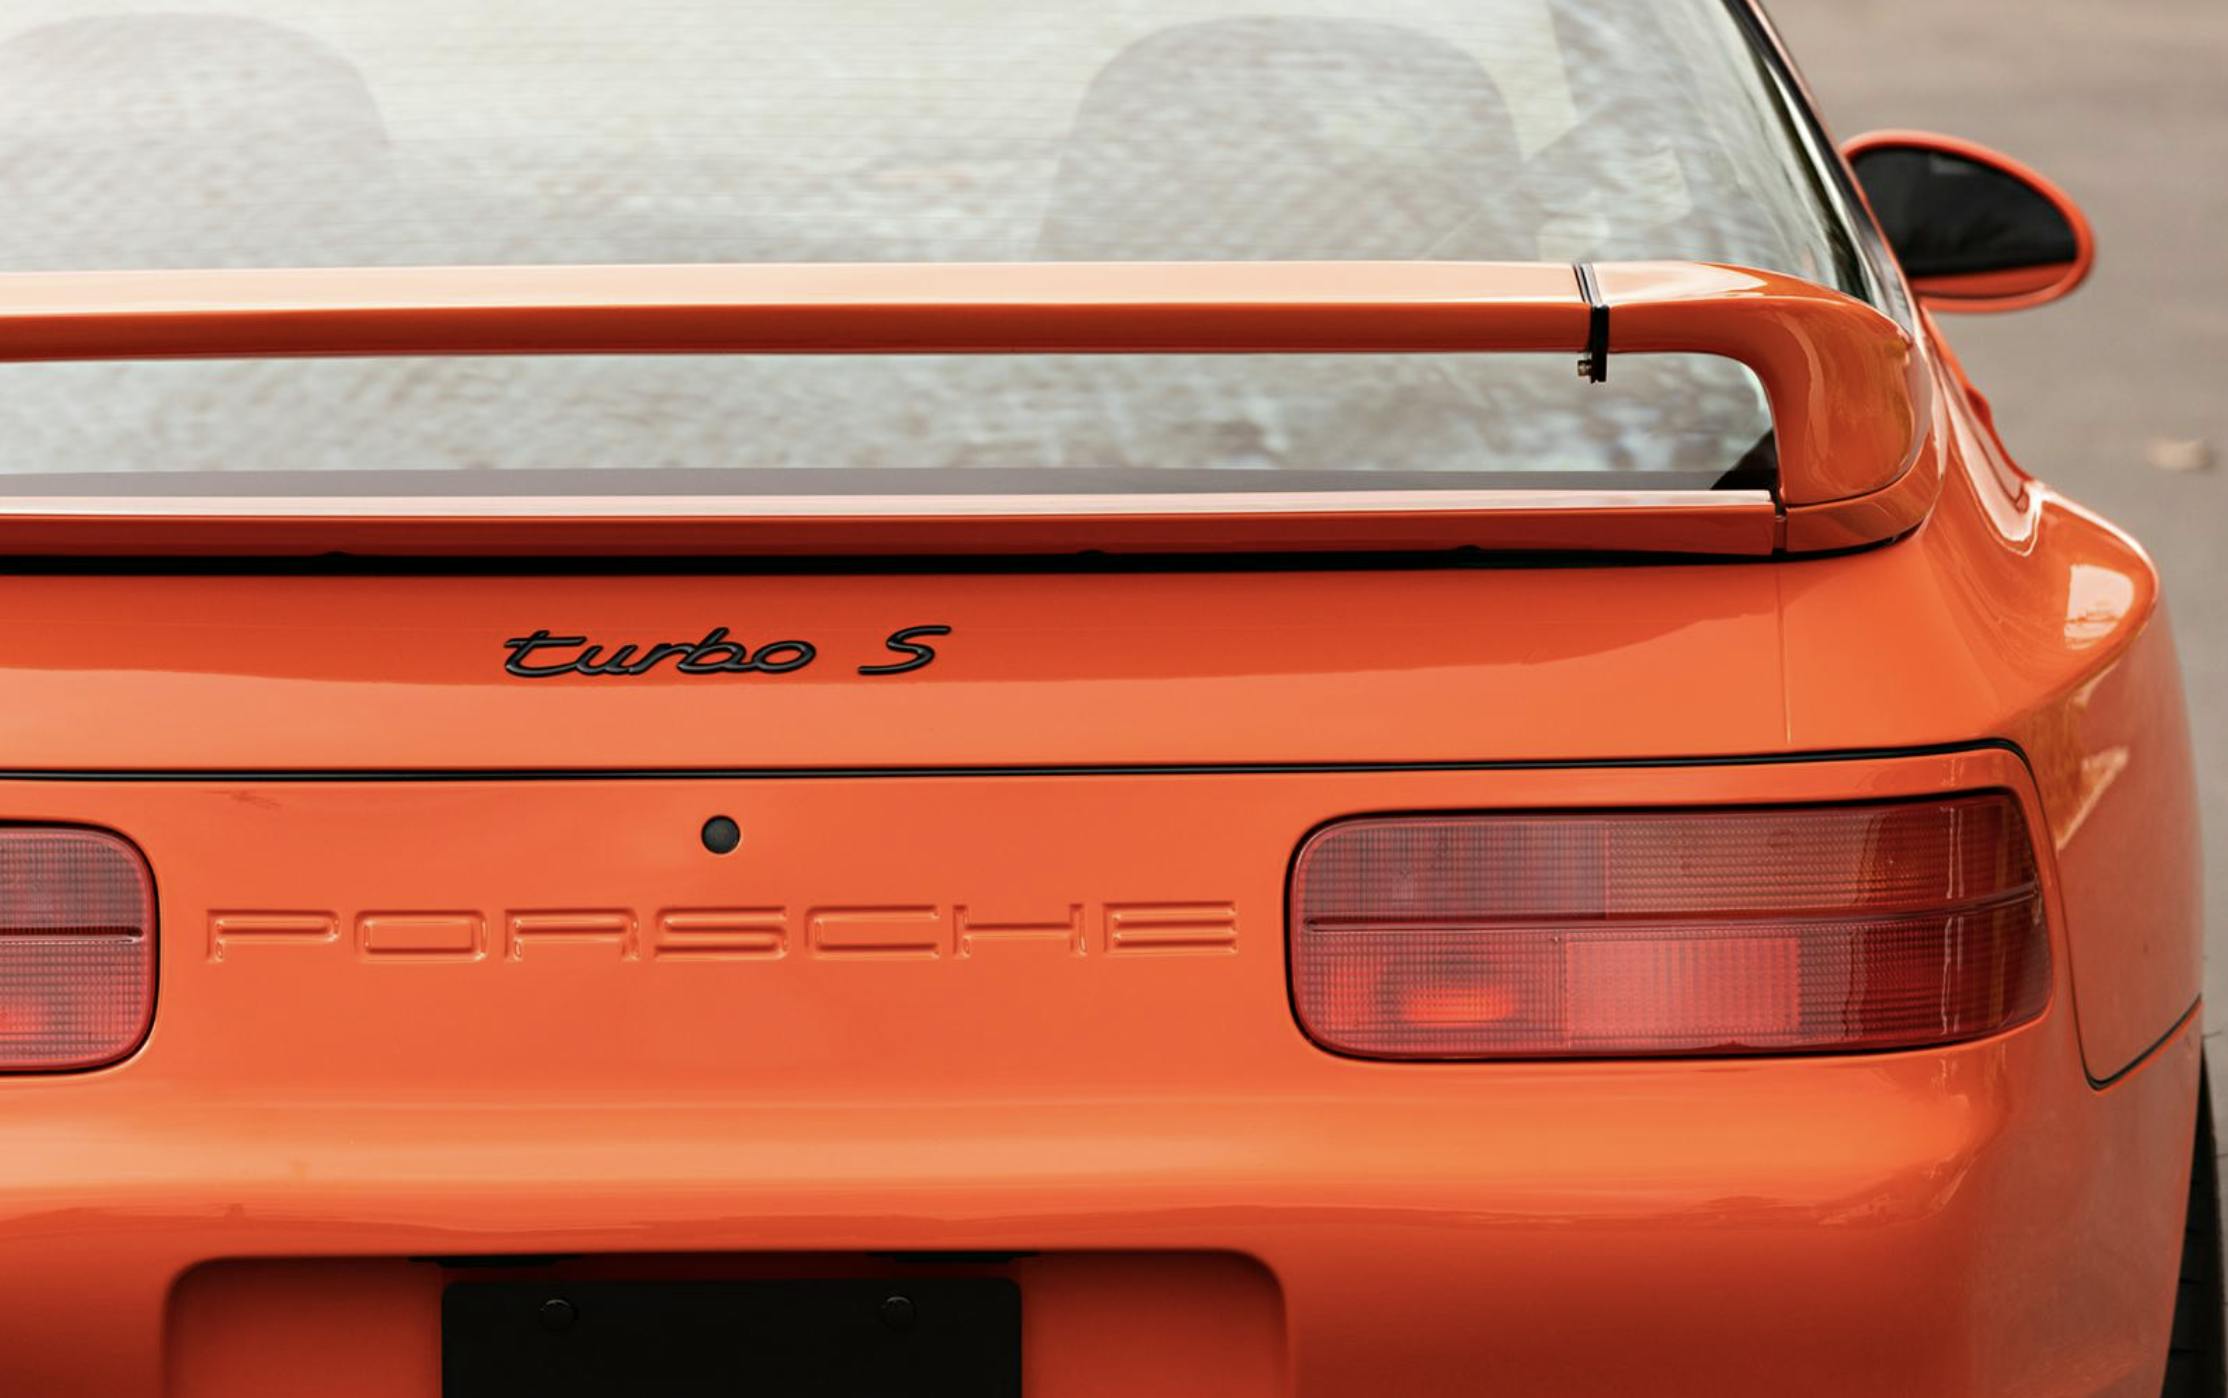 Porsche 968 Turbo S rear